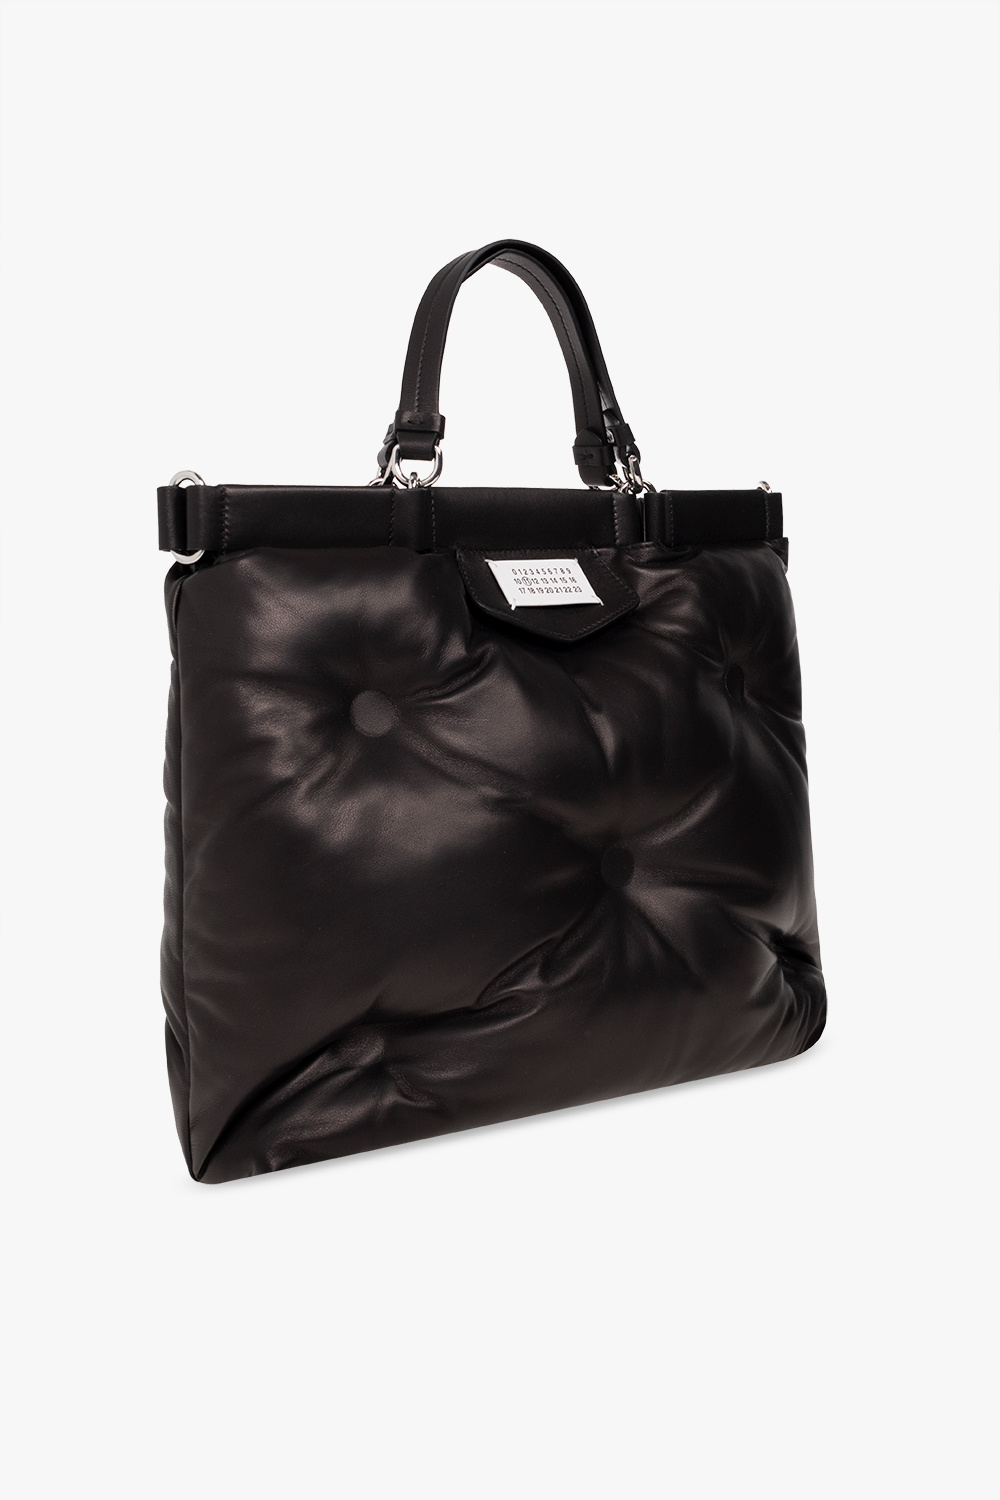 Maison Margiela ‘Glam Slam Shopping Medium’ shoulder bag